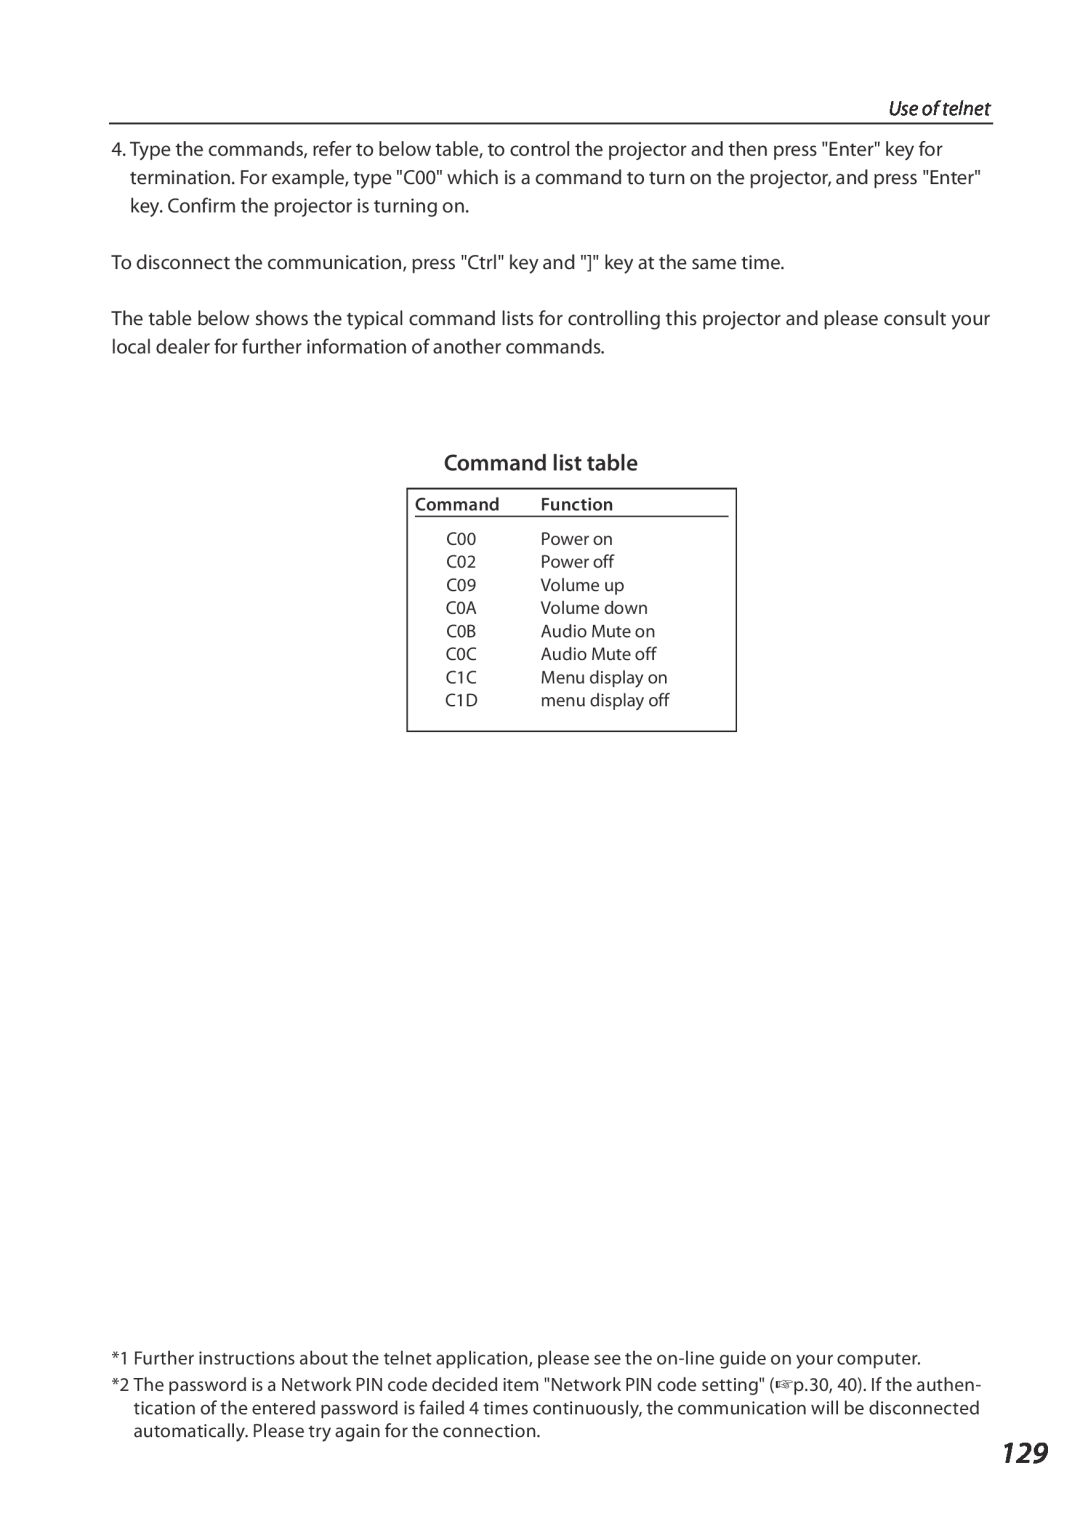 Eiki QXXAVC922---P owner manual Command list table, Use of telnet 